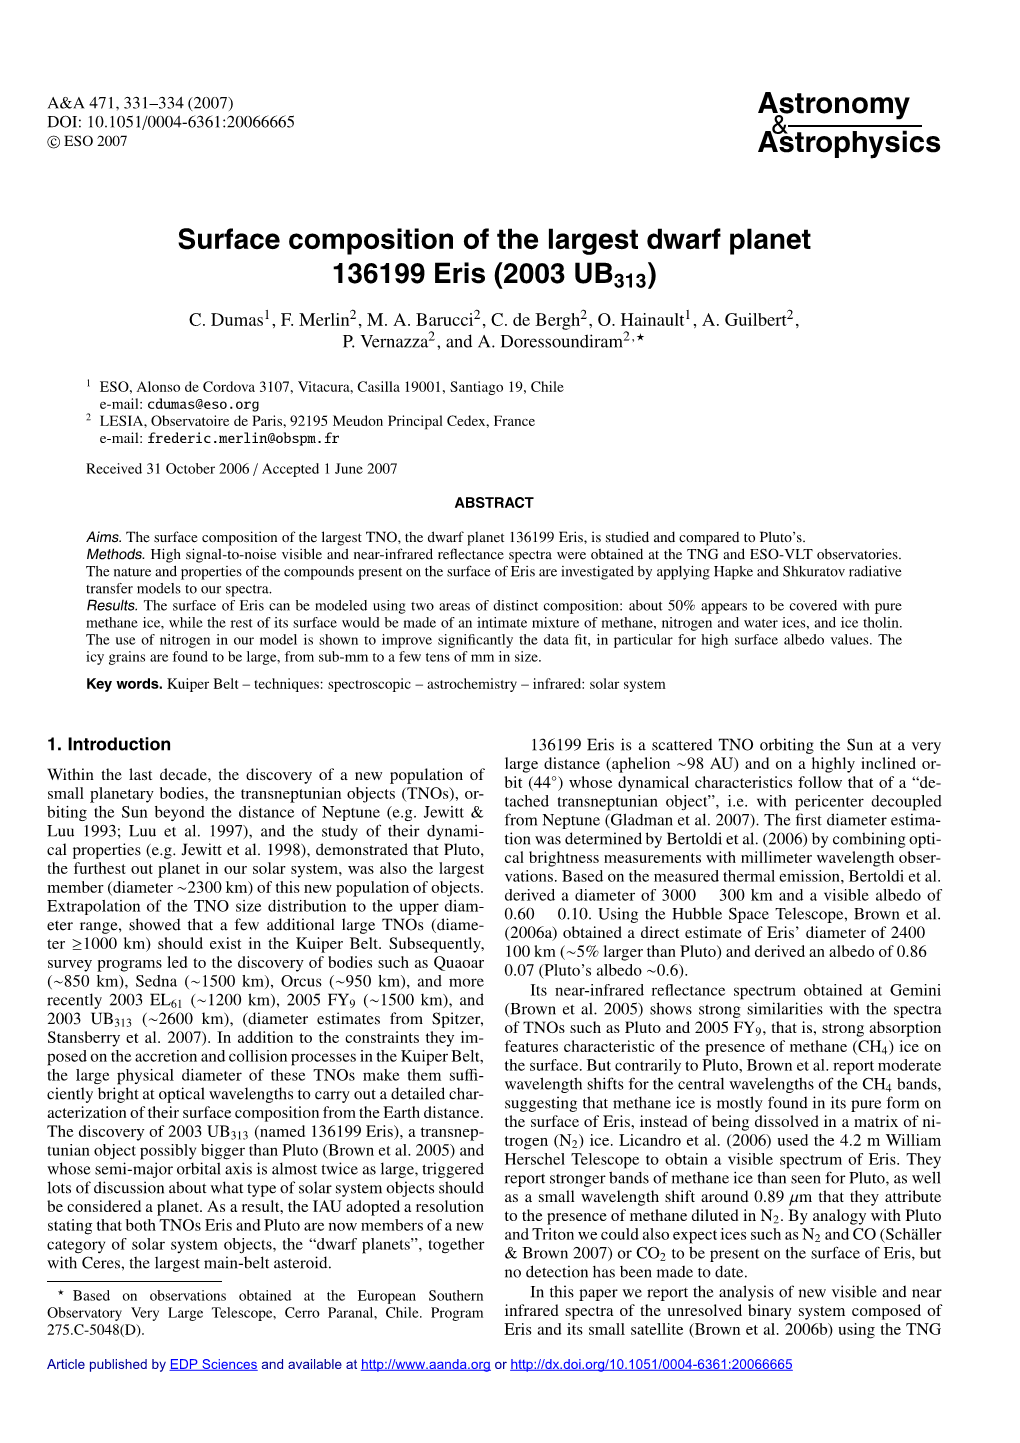 Surface Composition of the Largest Dwarf Planet 136199 Eris (2003 UB313)